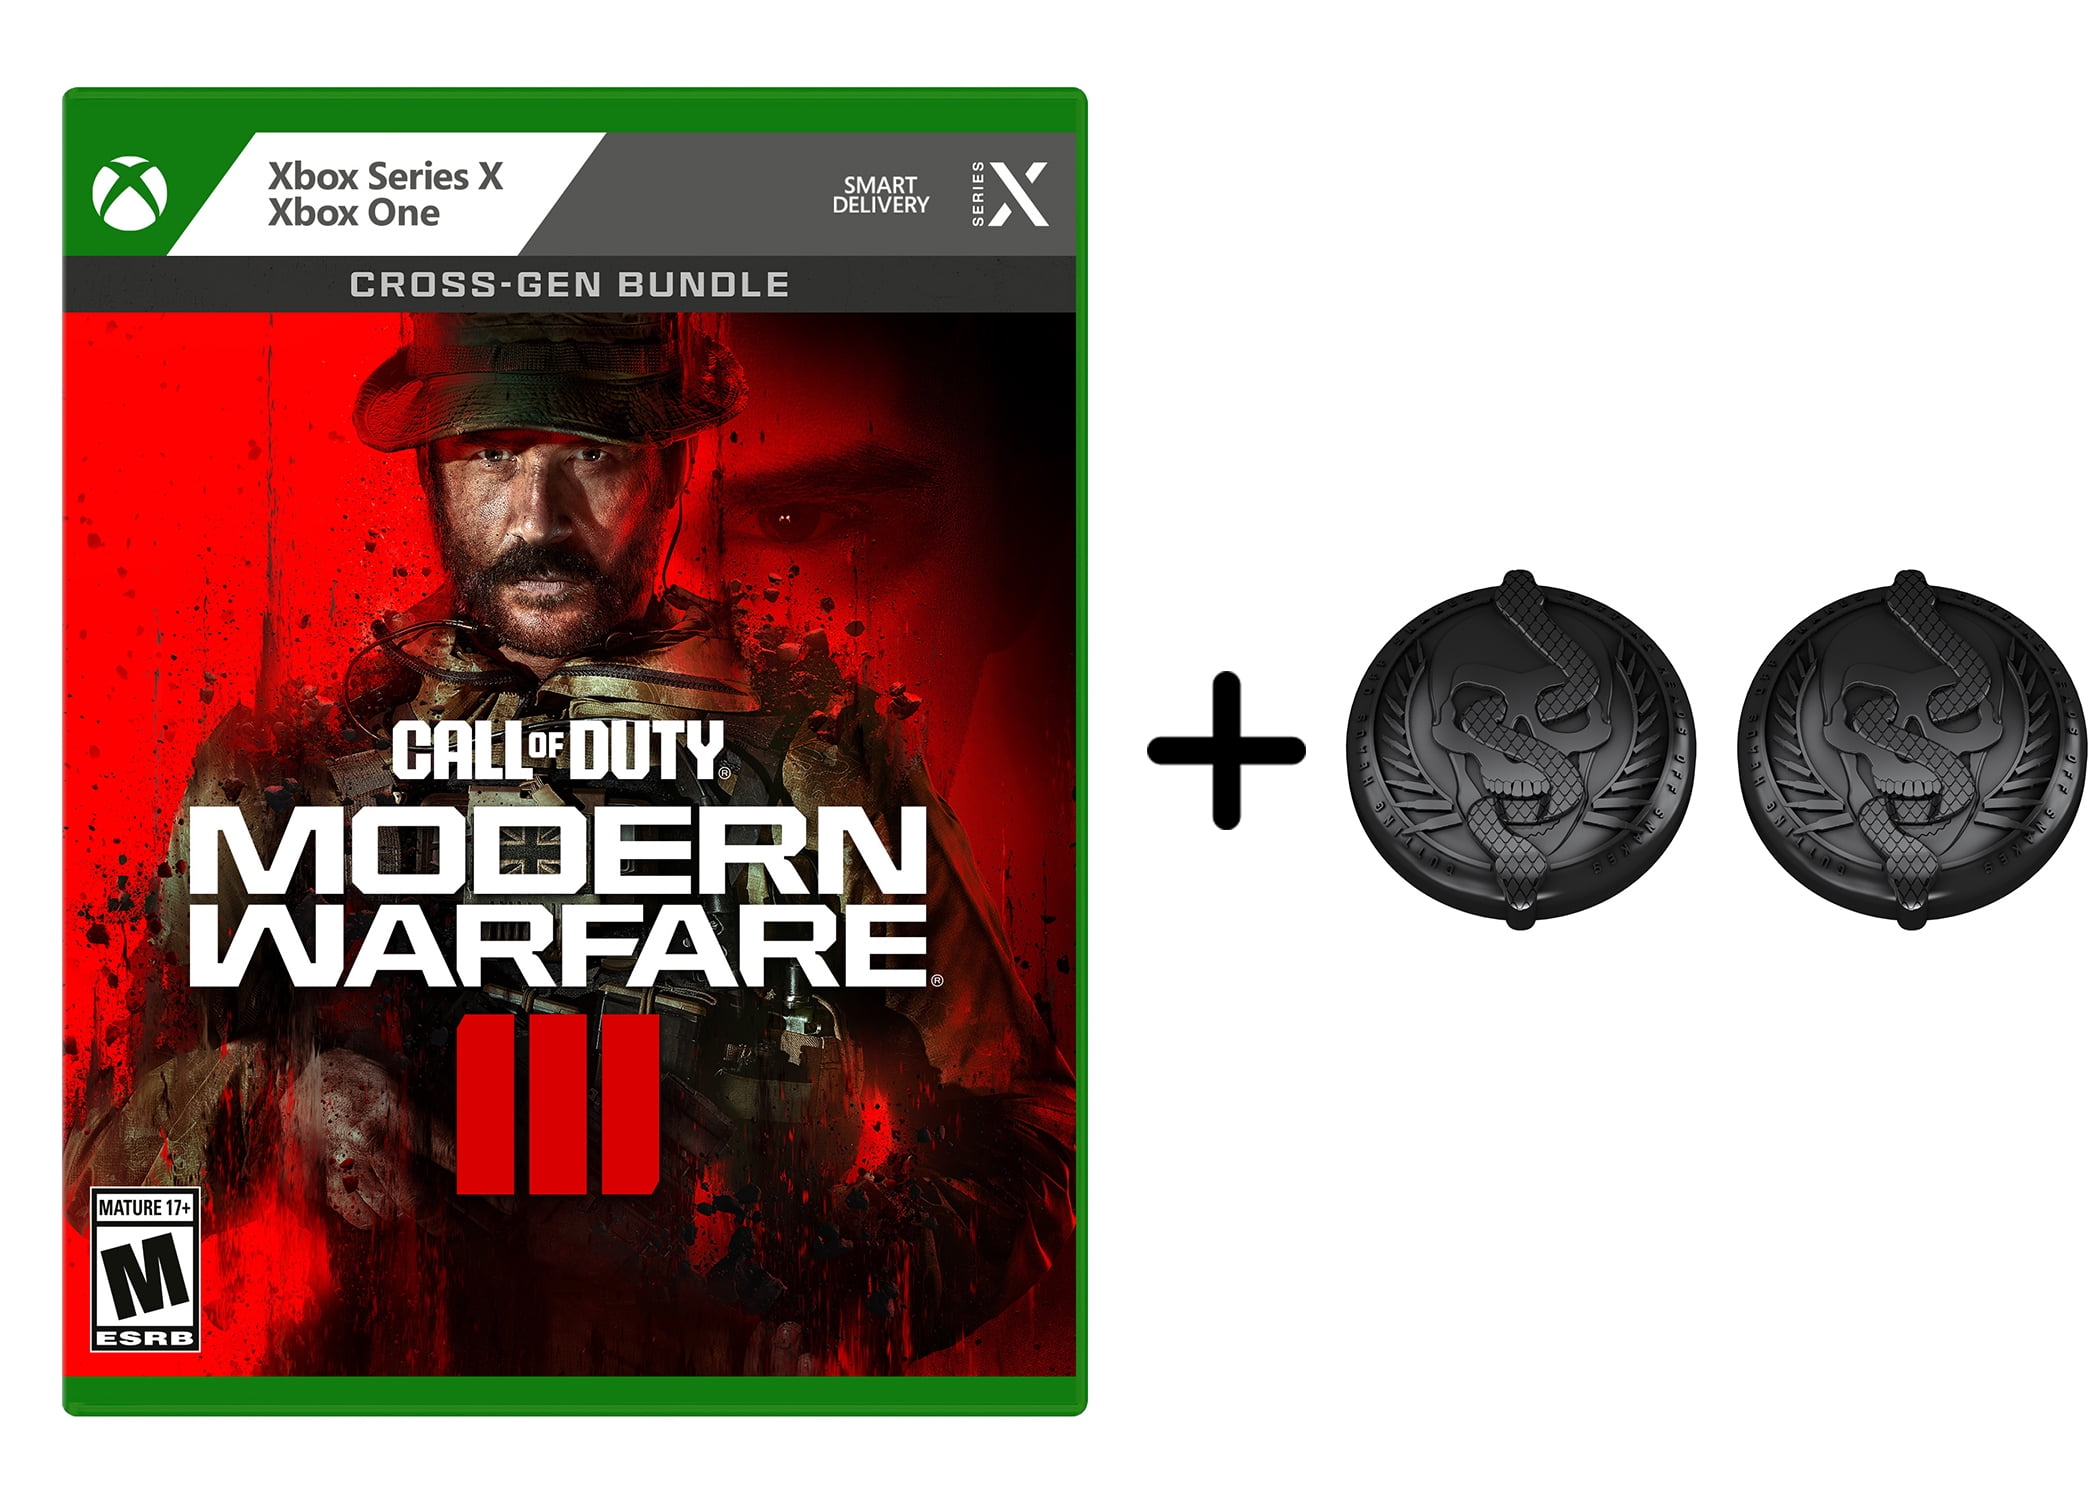 Xbox Series X and Modern Warfare 3 Bundled by Walmart in Amazing Black  Friday Deal - FandomWire